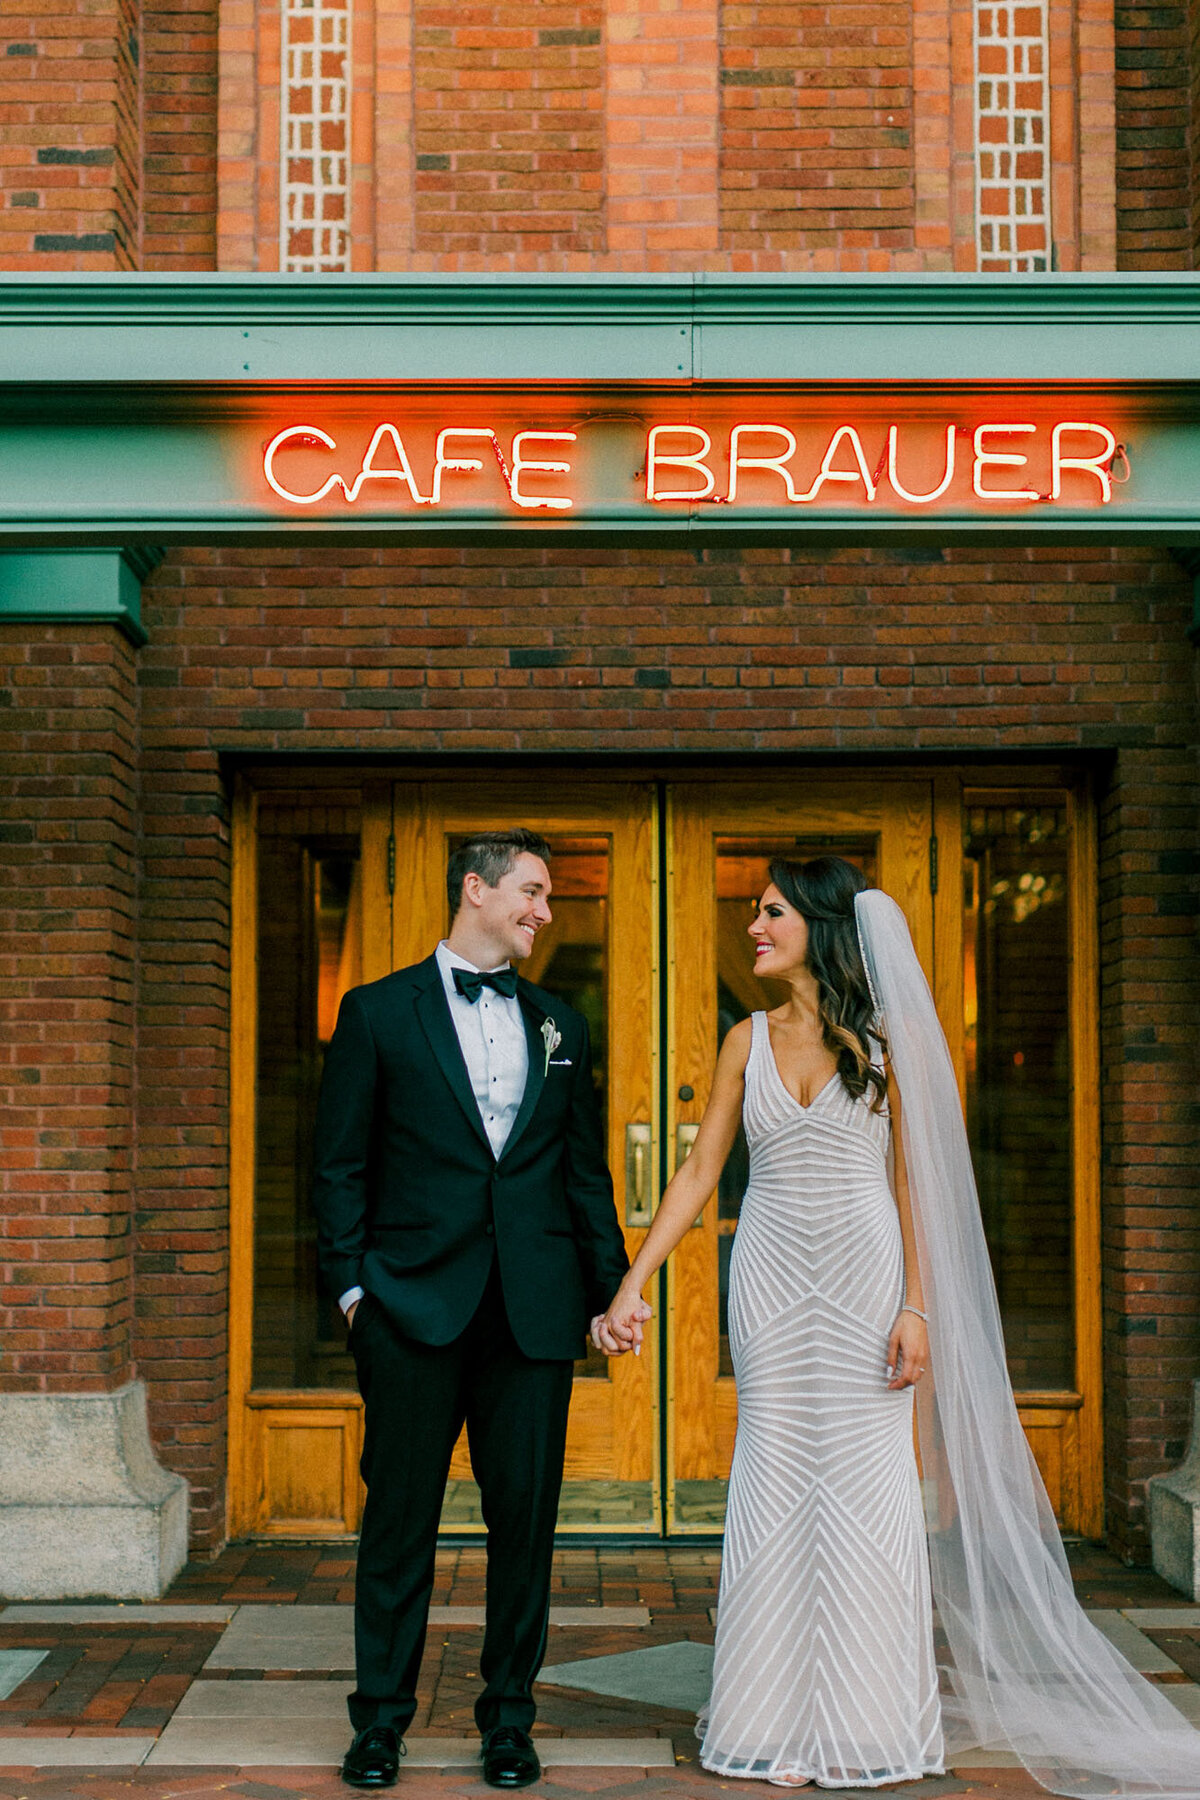 Cafe-Brauer-Wedding-0100